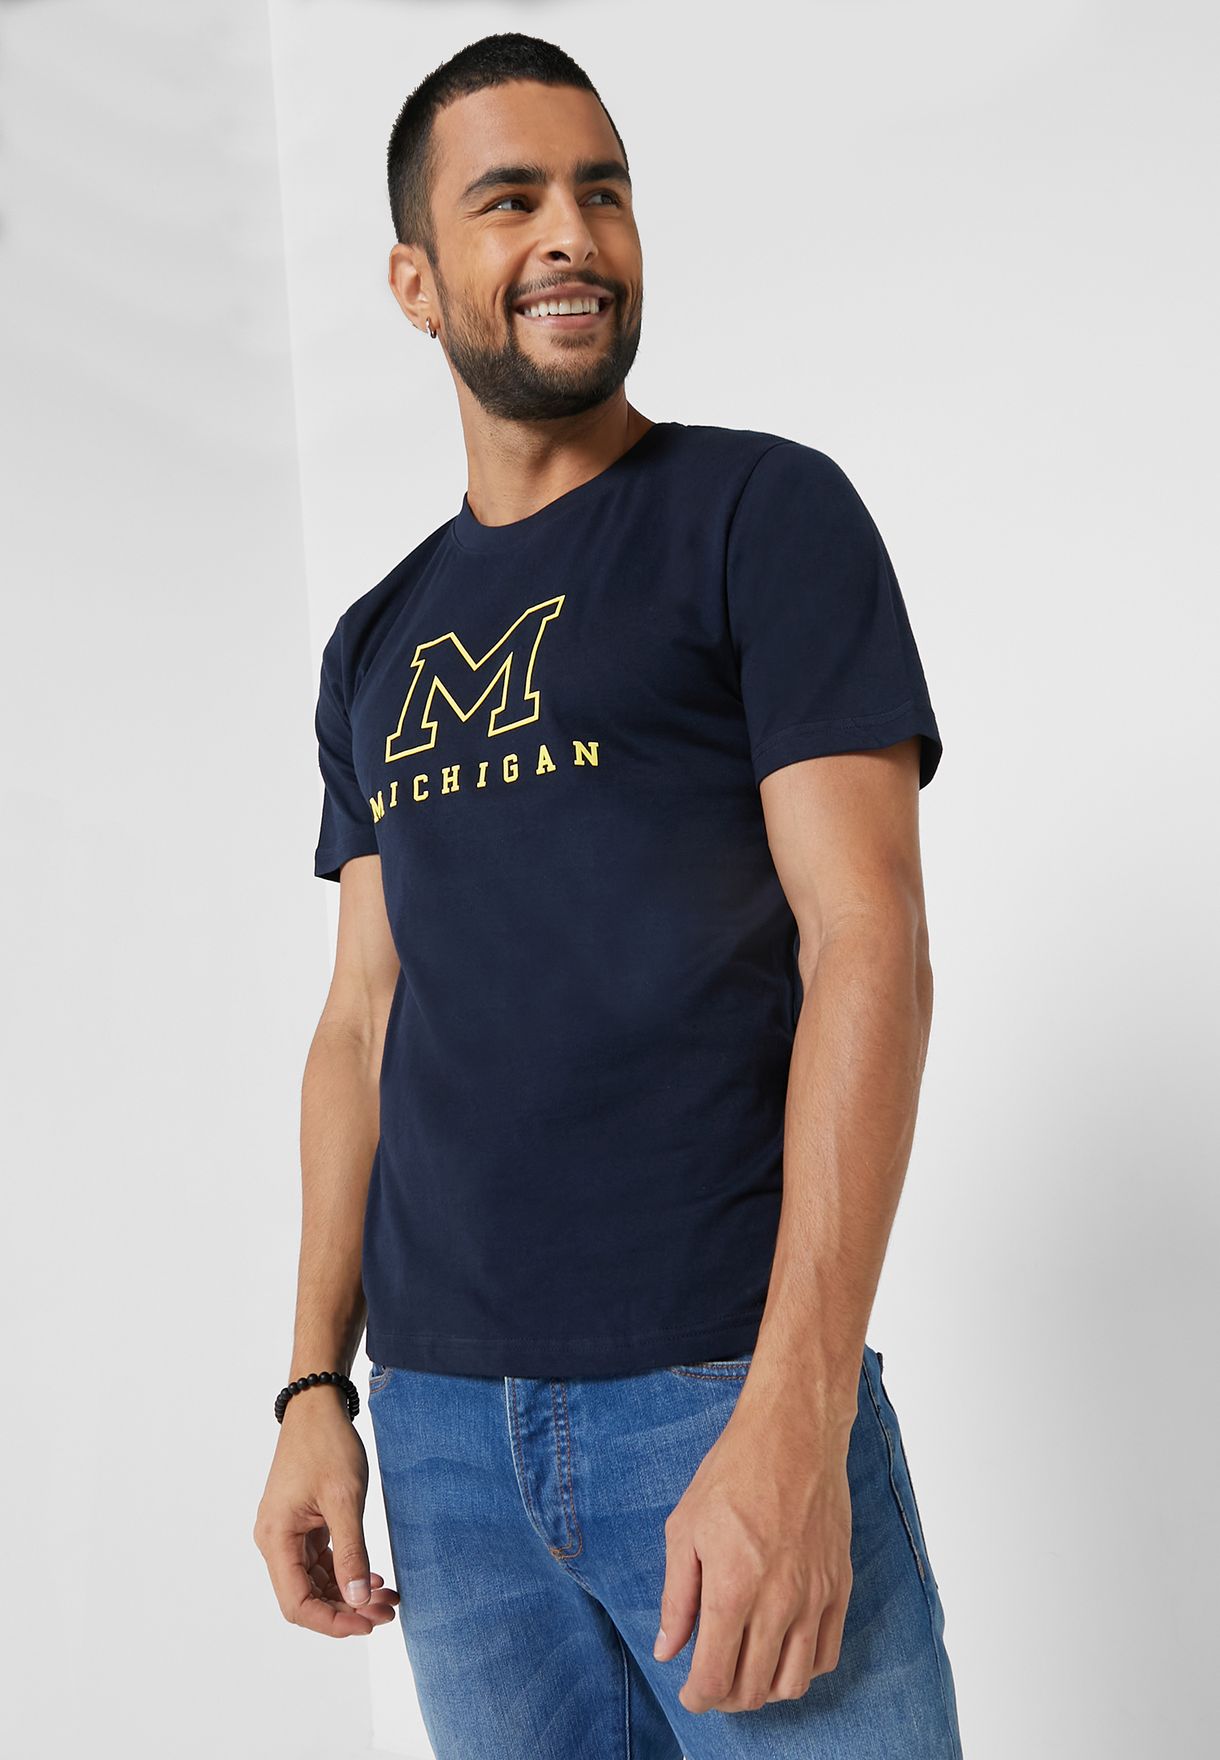 Michigan Print T Shirt